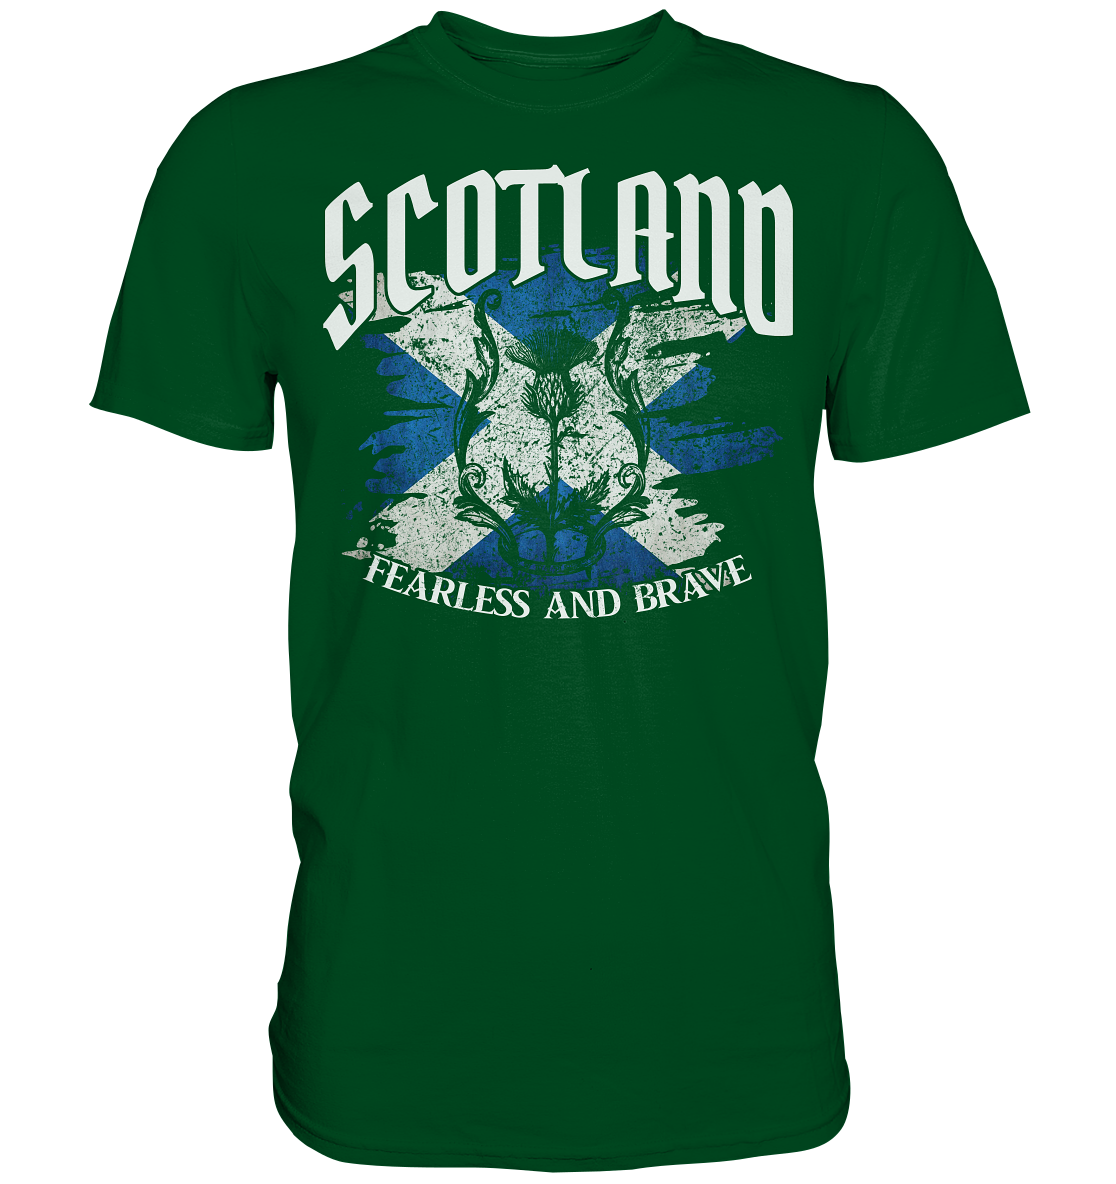 Scotland "Fearless and Brave / Splatter" - Premium Shirt